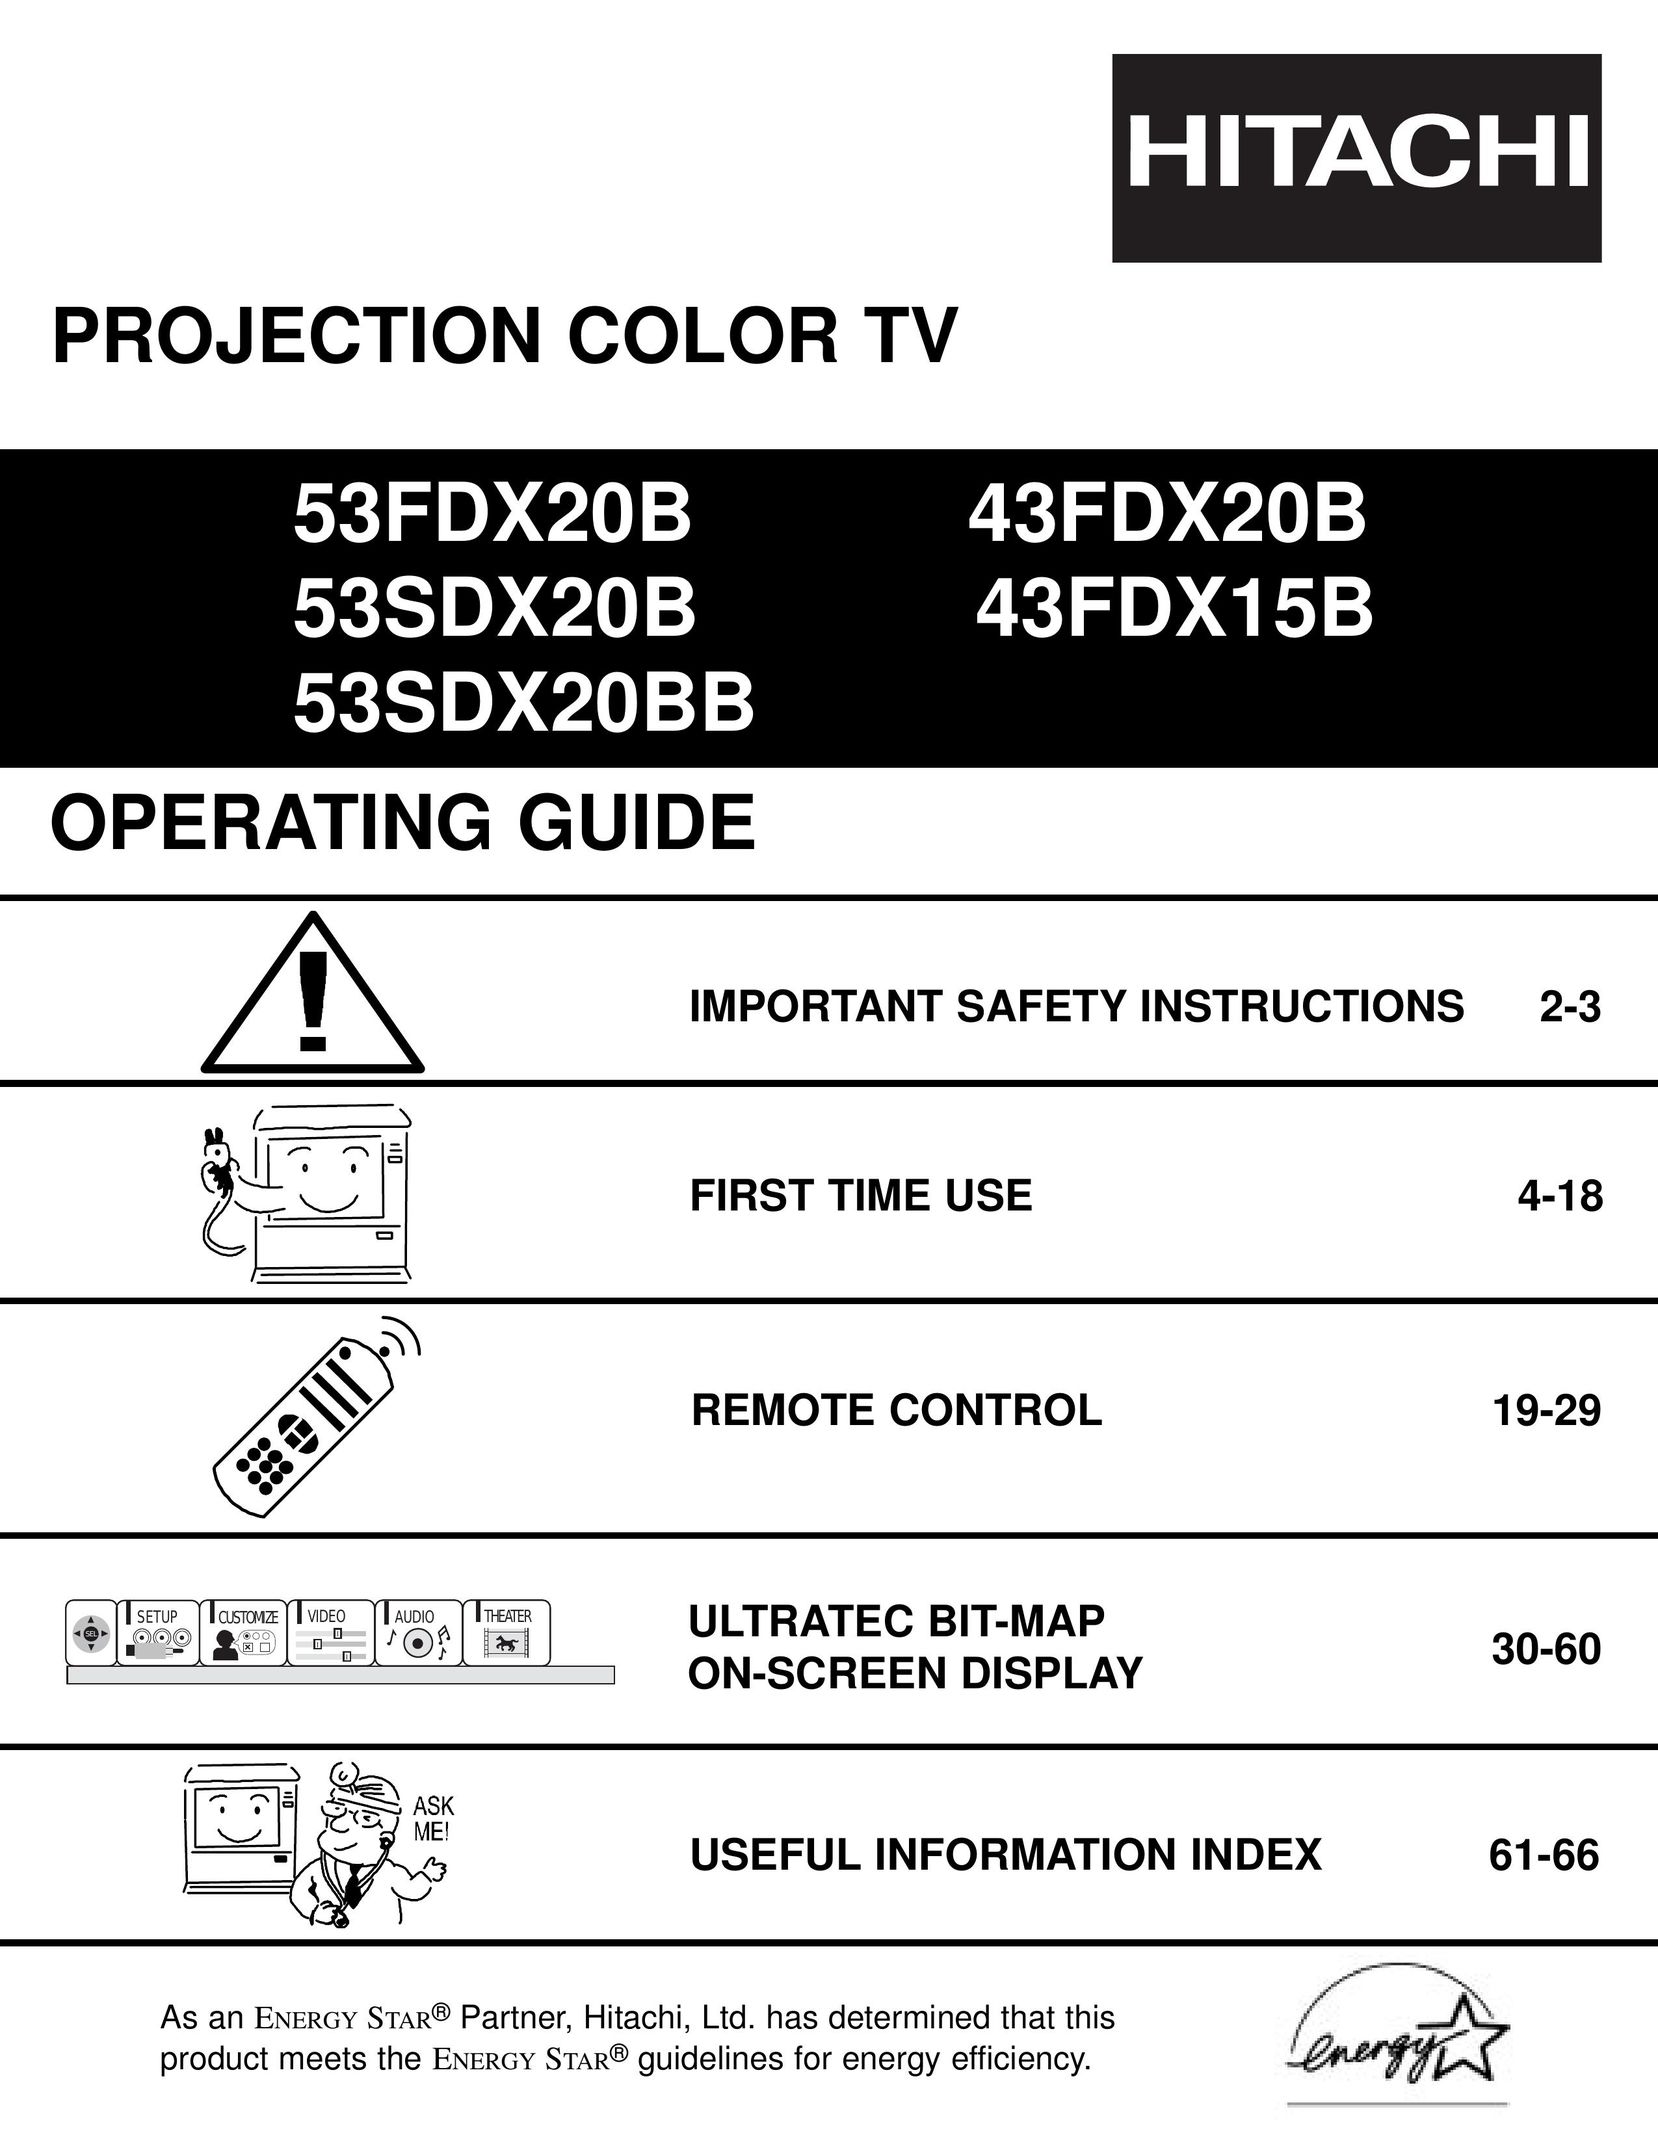 Hitachi 43FDX15B Projection Television User Manual